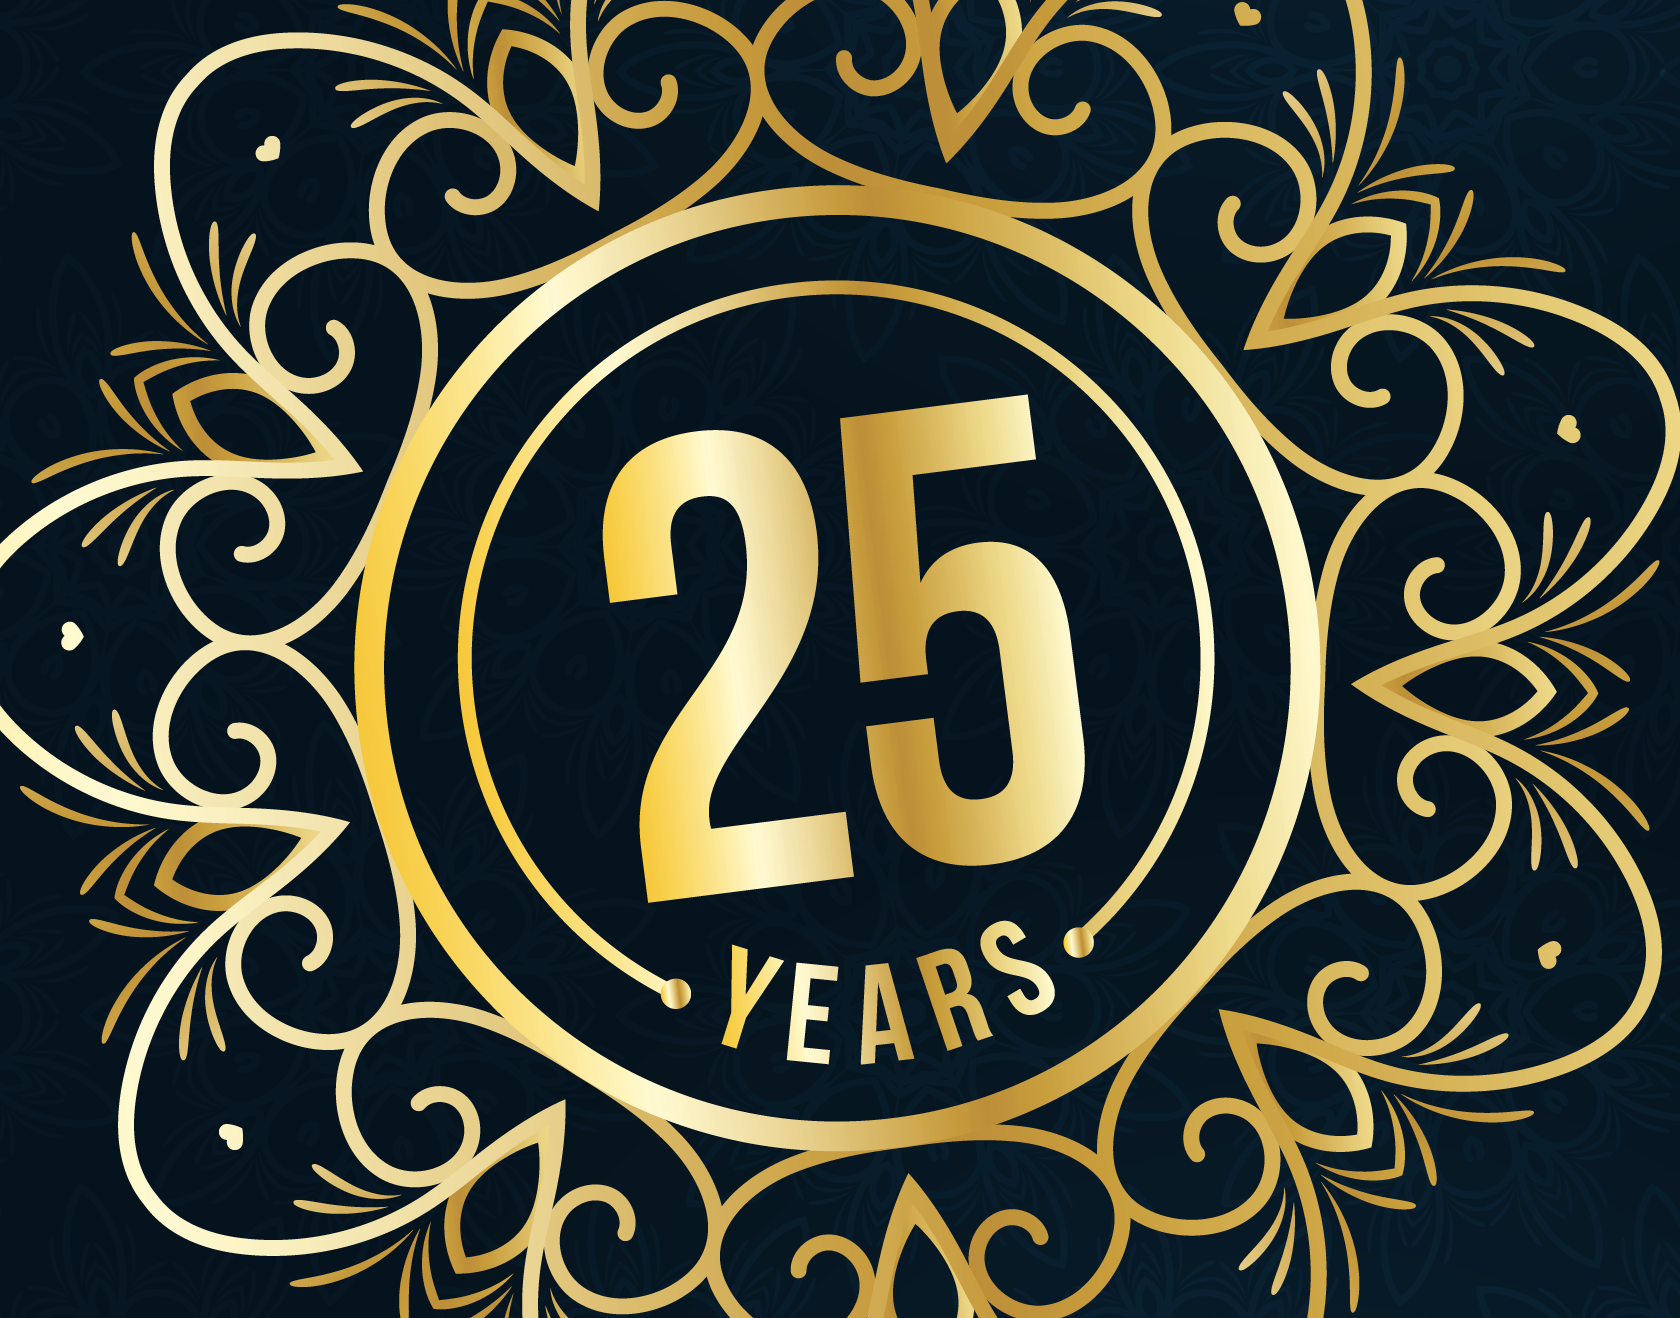 Granite Employees Celebrating 25 Years of Service